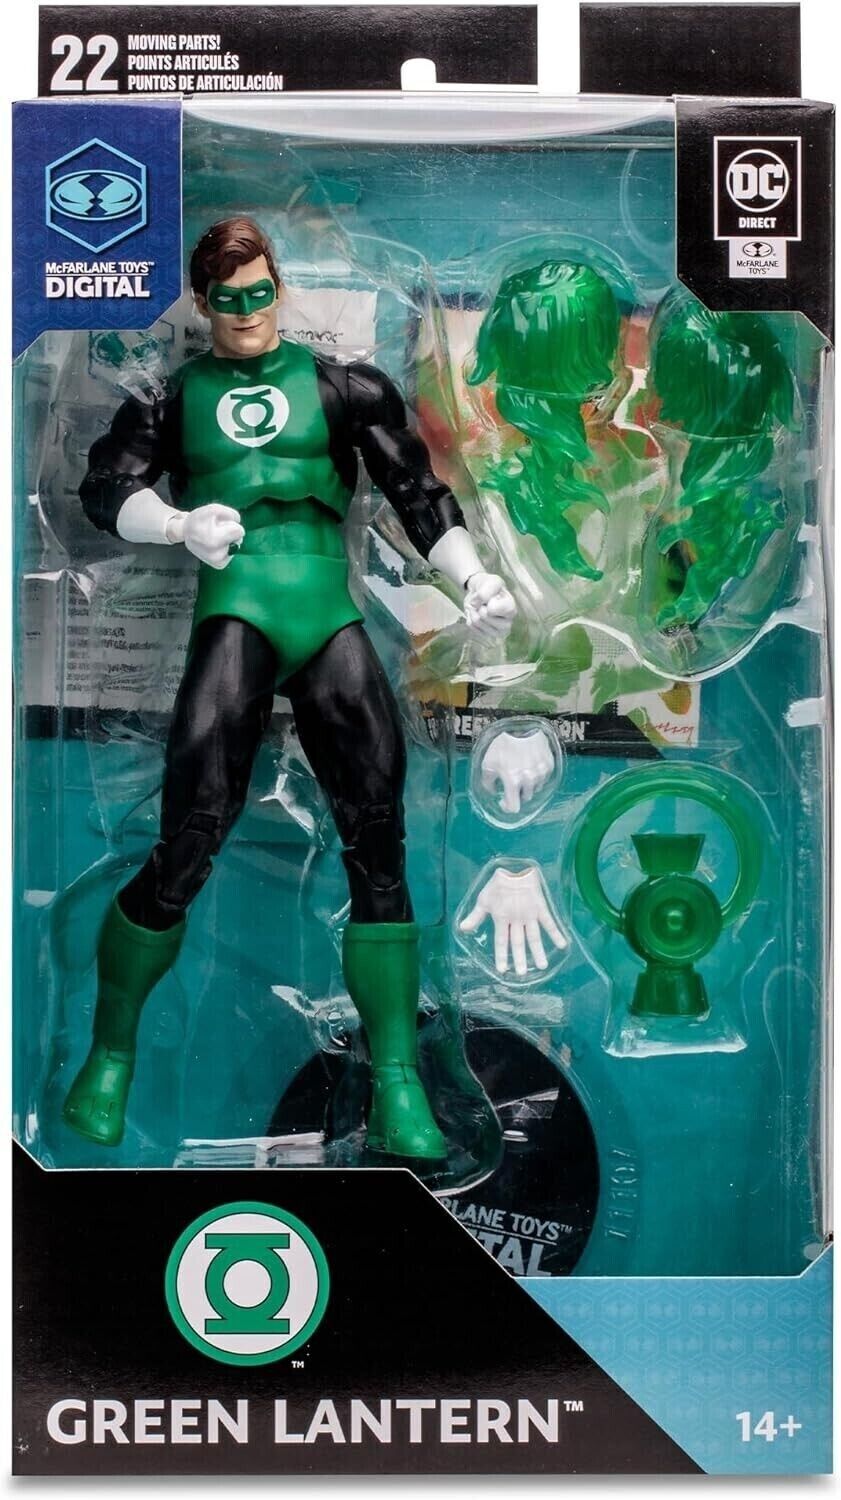 Astonishing DC Green Lantern (Silver Age) (With Digital Code) McFarlane Toys Multiverse on eBay